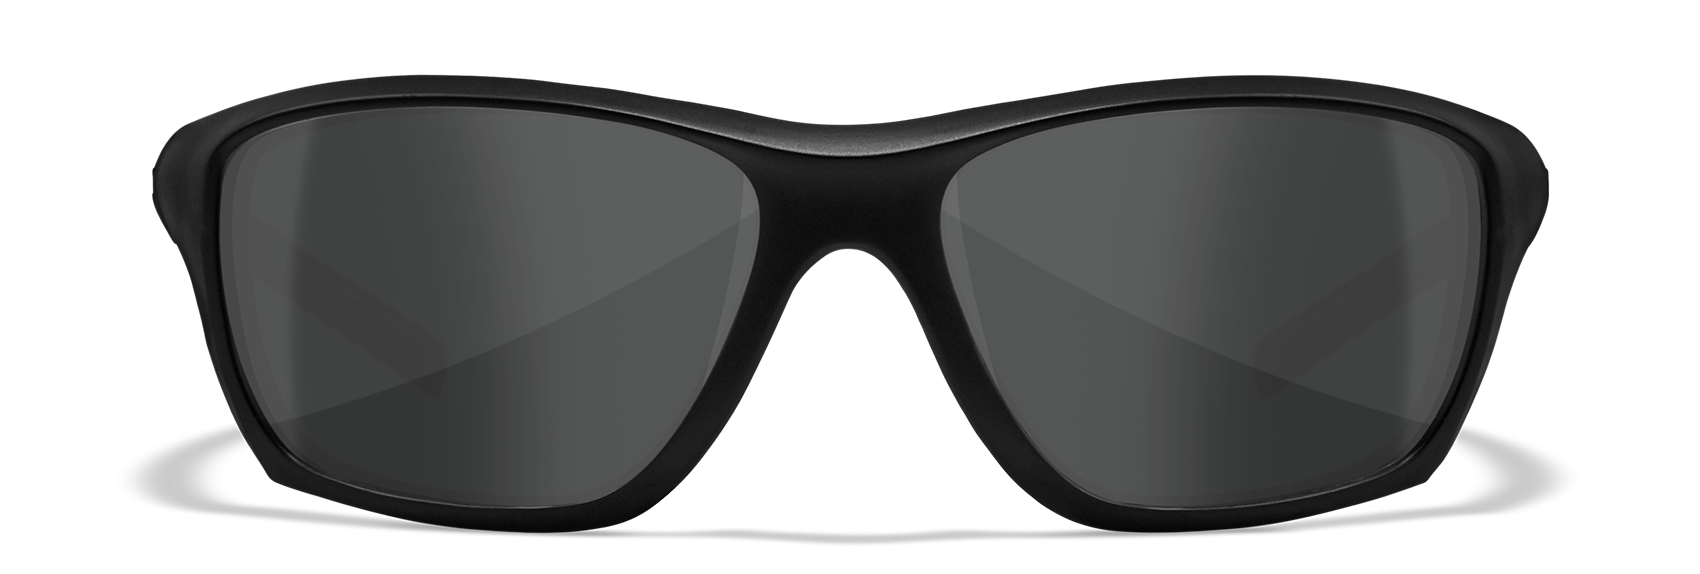 Wiley X WX Aspect Smoke Gray Lens Polycarbonate Sunglasses